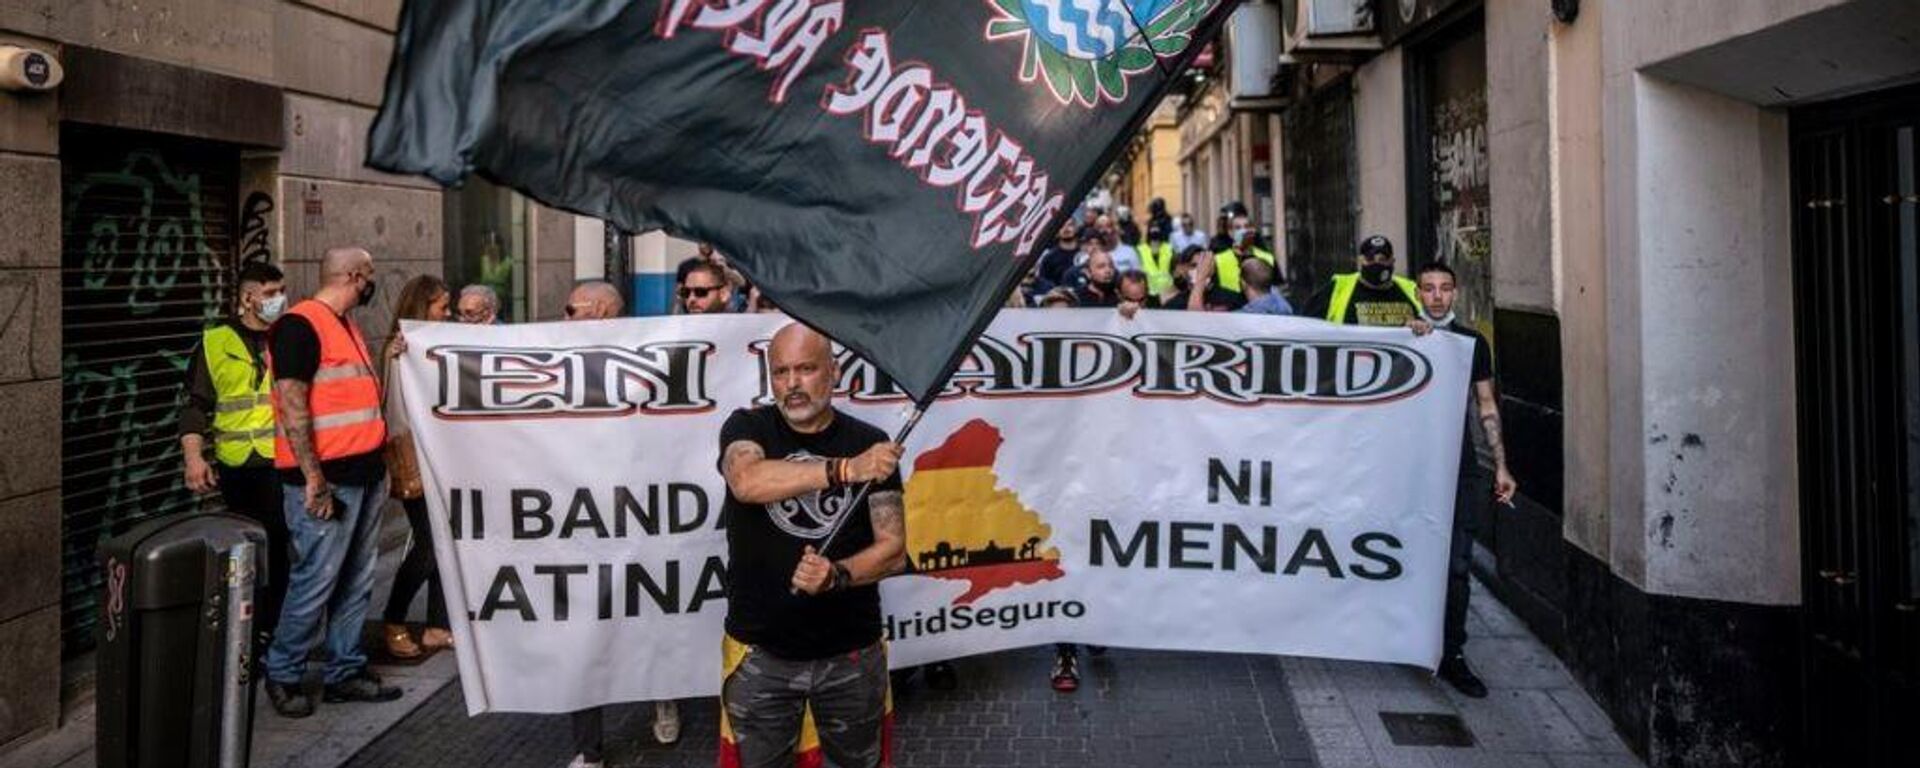 Manifestación neonazi en Chueca, Madrid - Sputnik Mundo, 1920, 03.10.2021